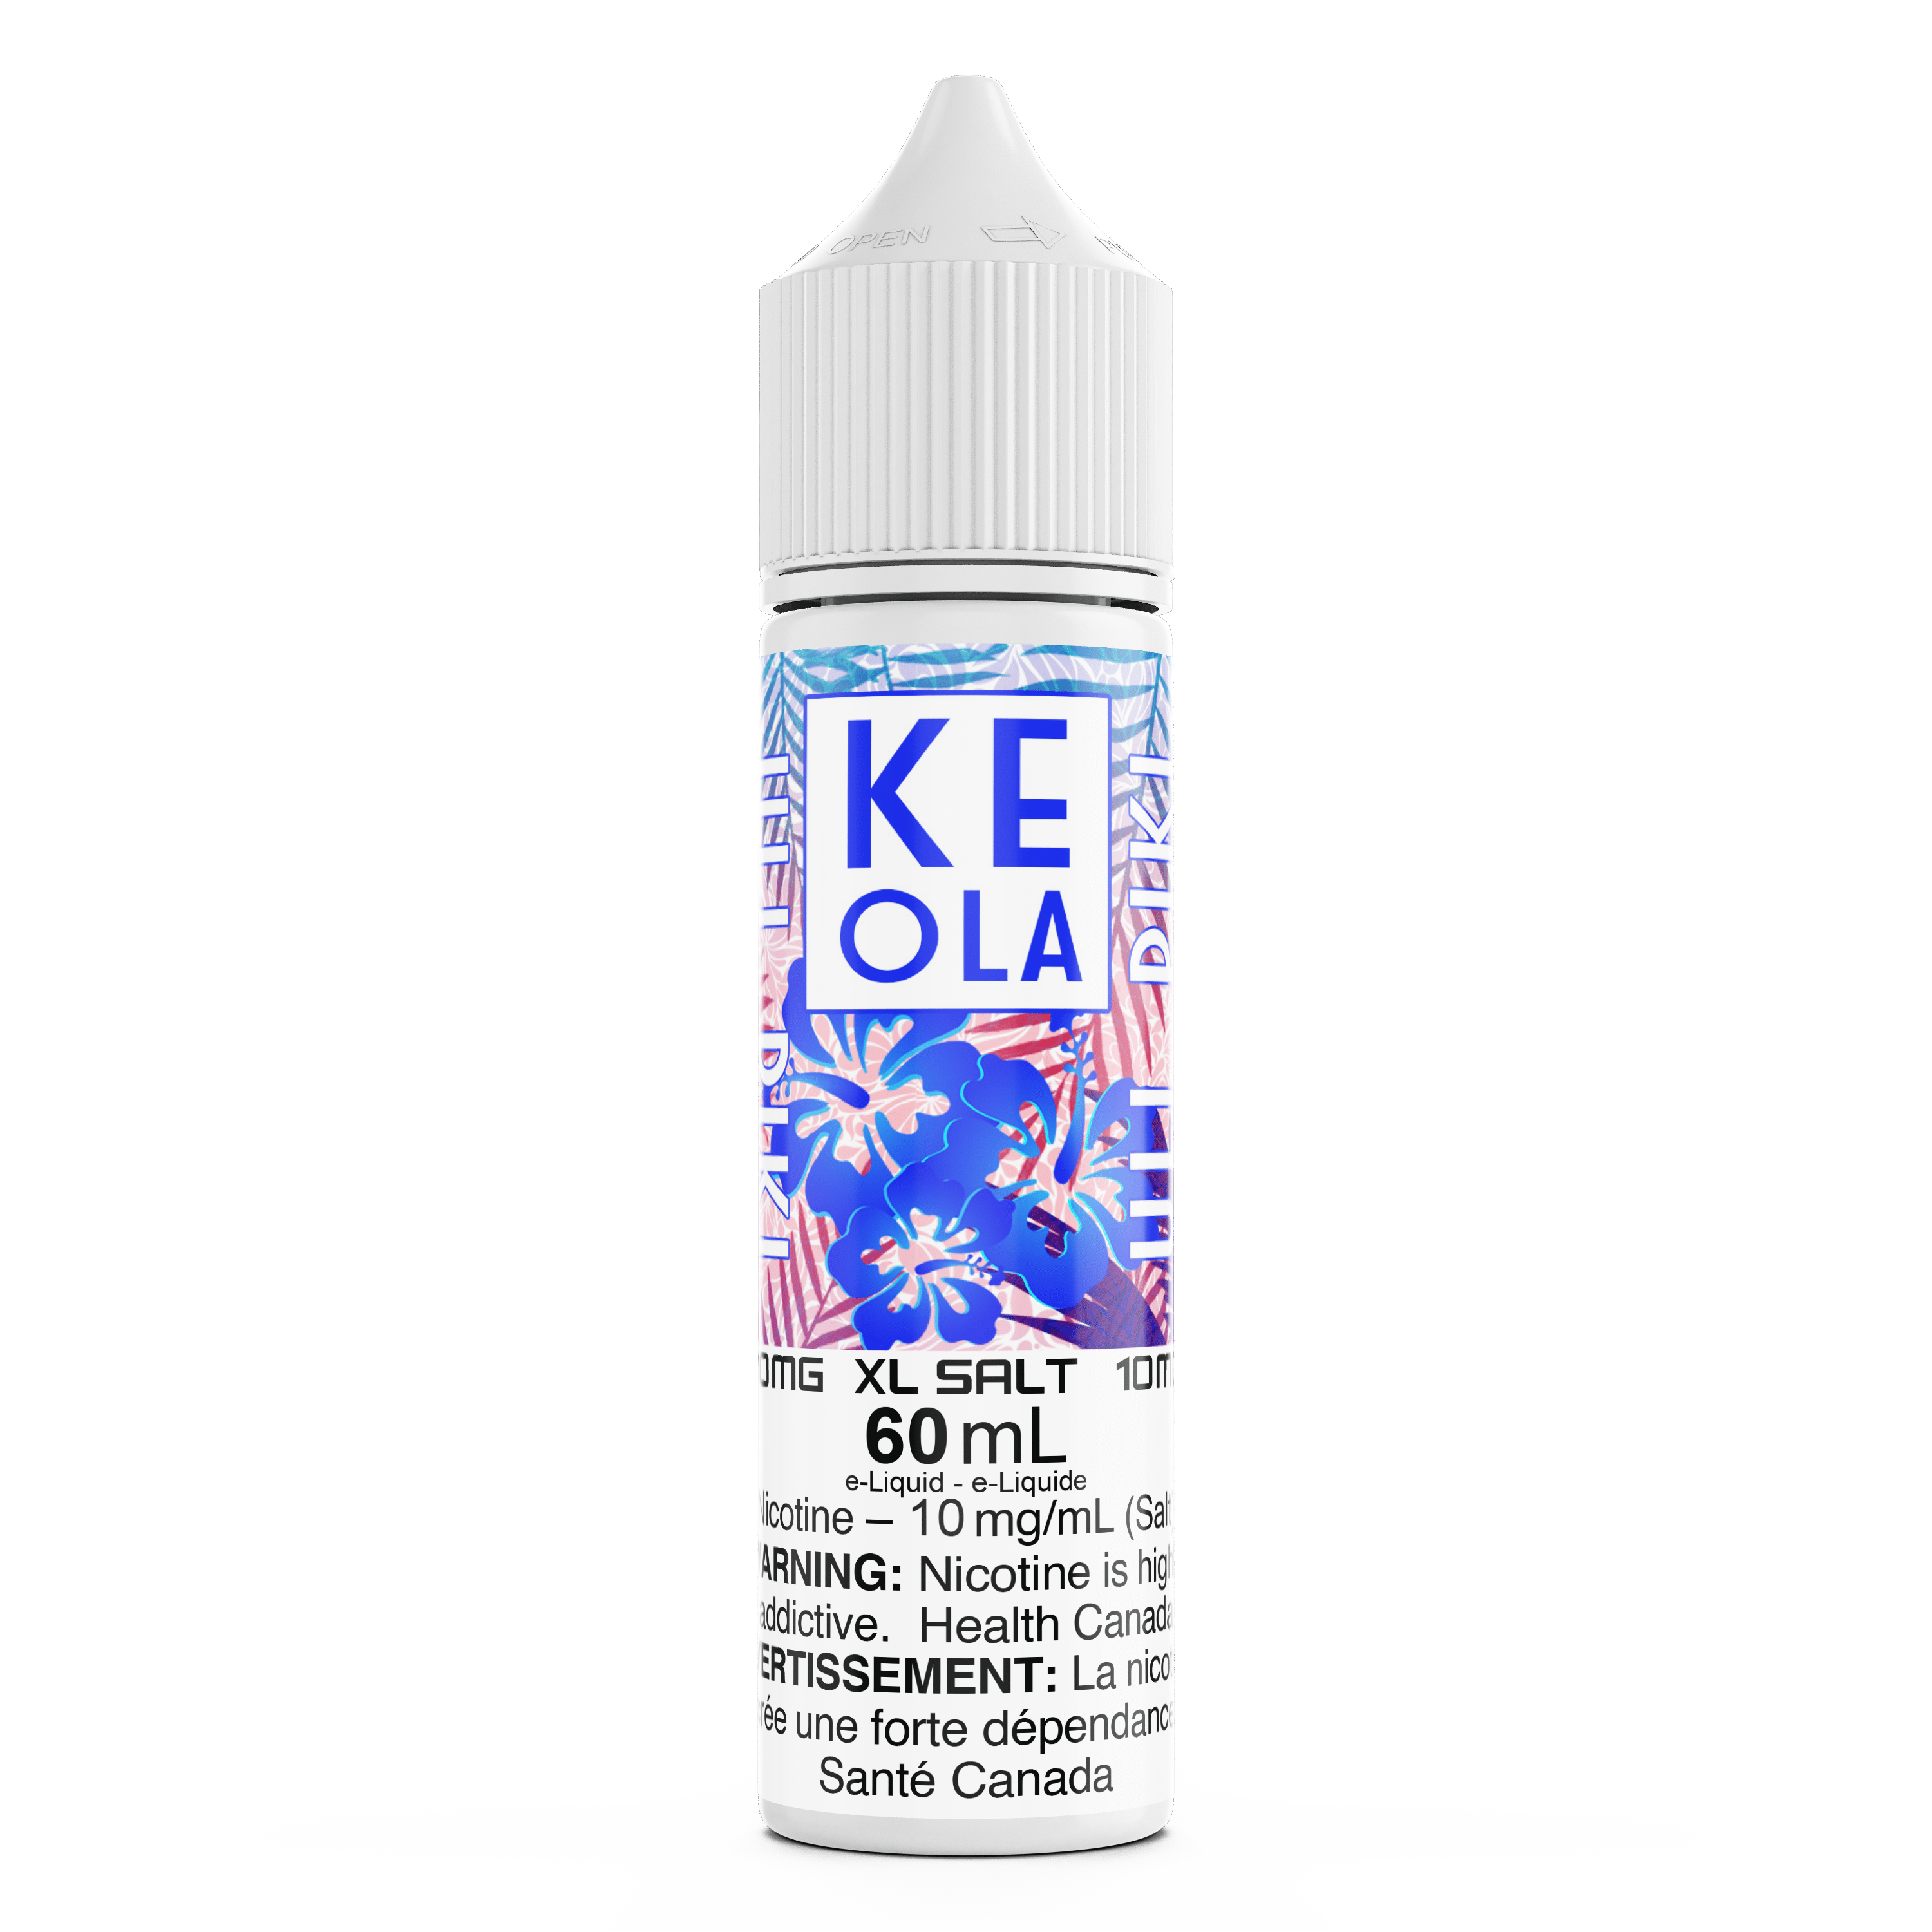 KEOLA XL SALT - ULI PIKI available on Canada online vape shop